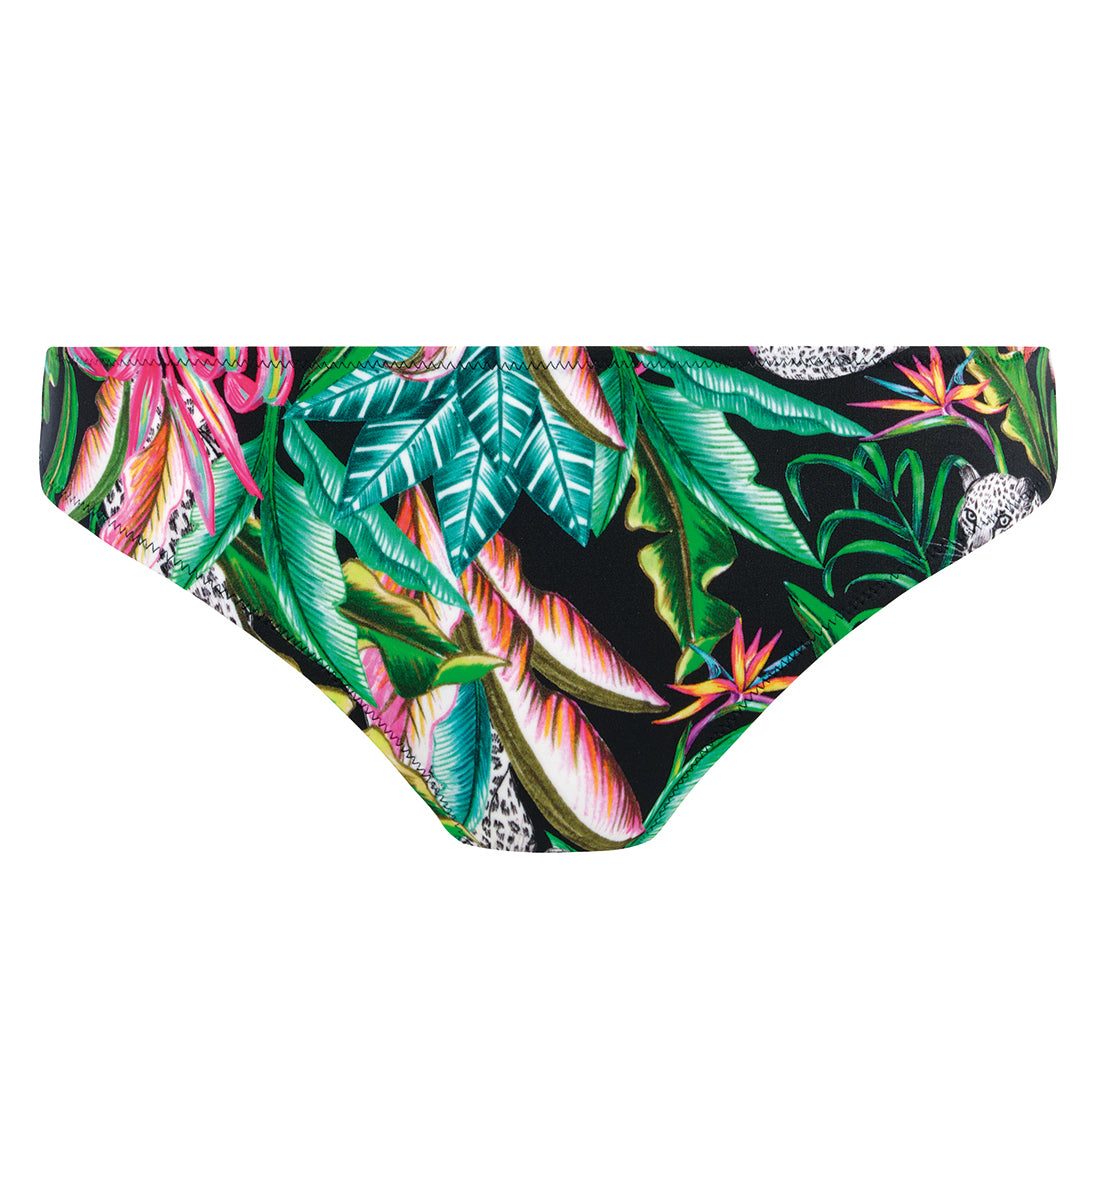 Freya Cala Selva Bikini Swim Brief (203170),XS,Jungle - Jungle,XS